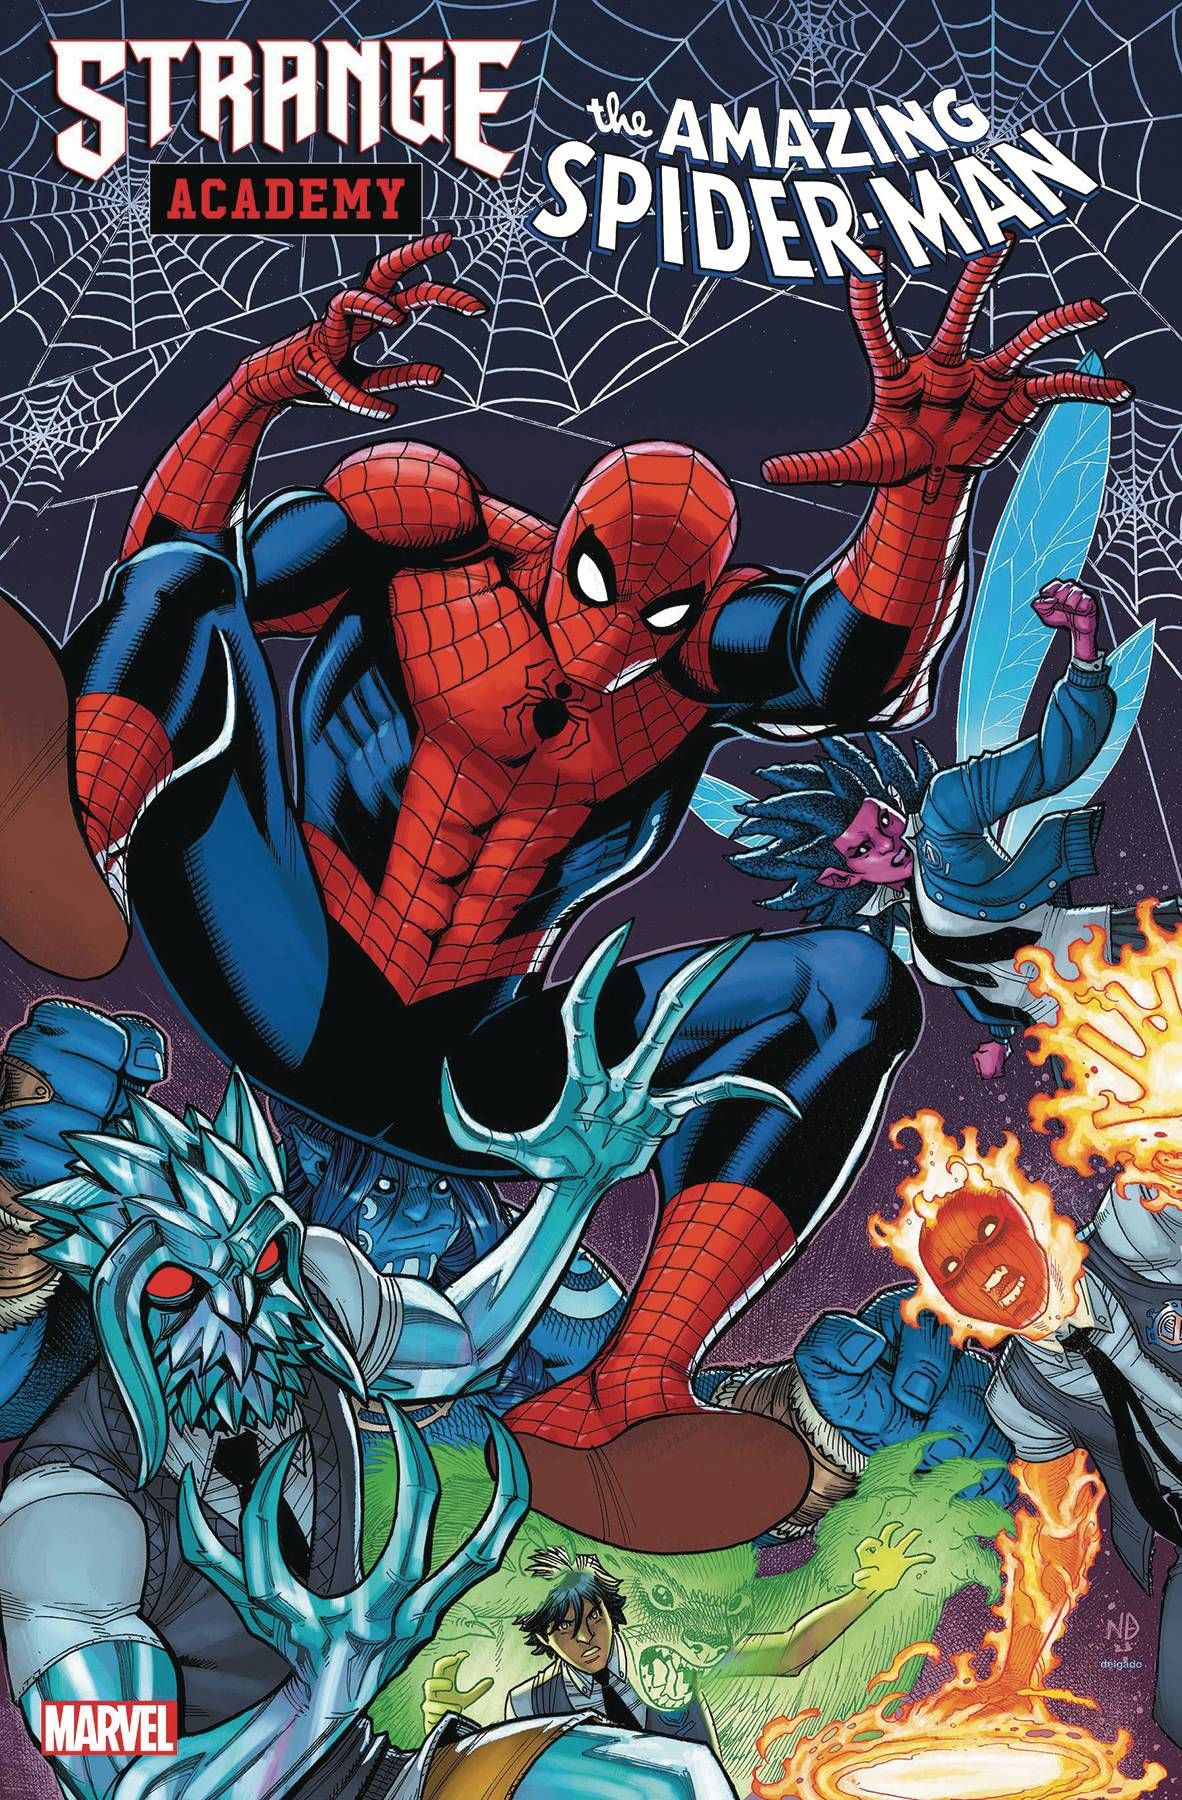 Strange Academy: Amazing Spider-Man Comic